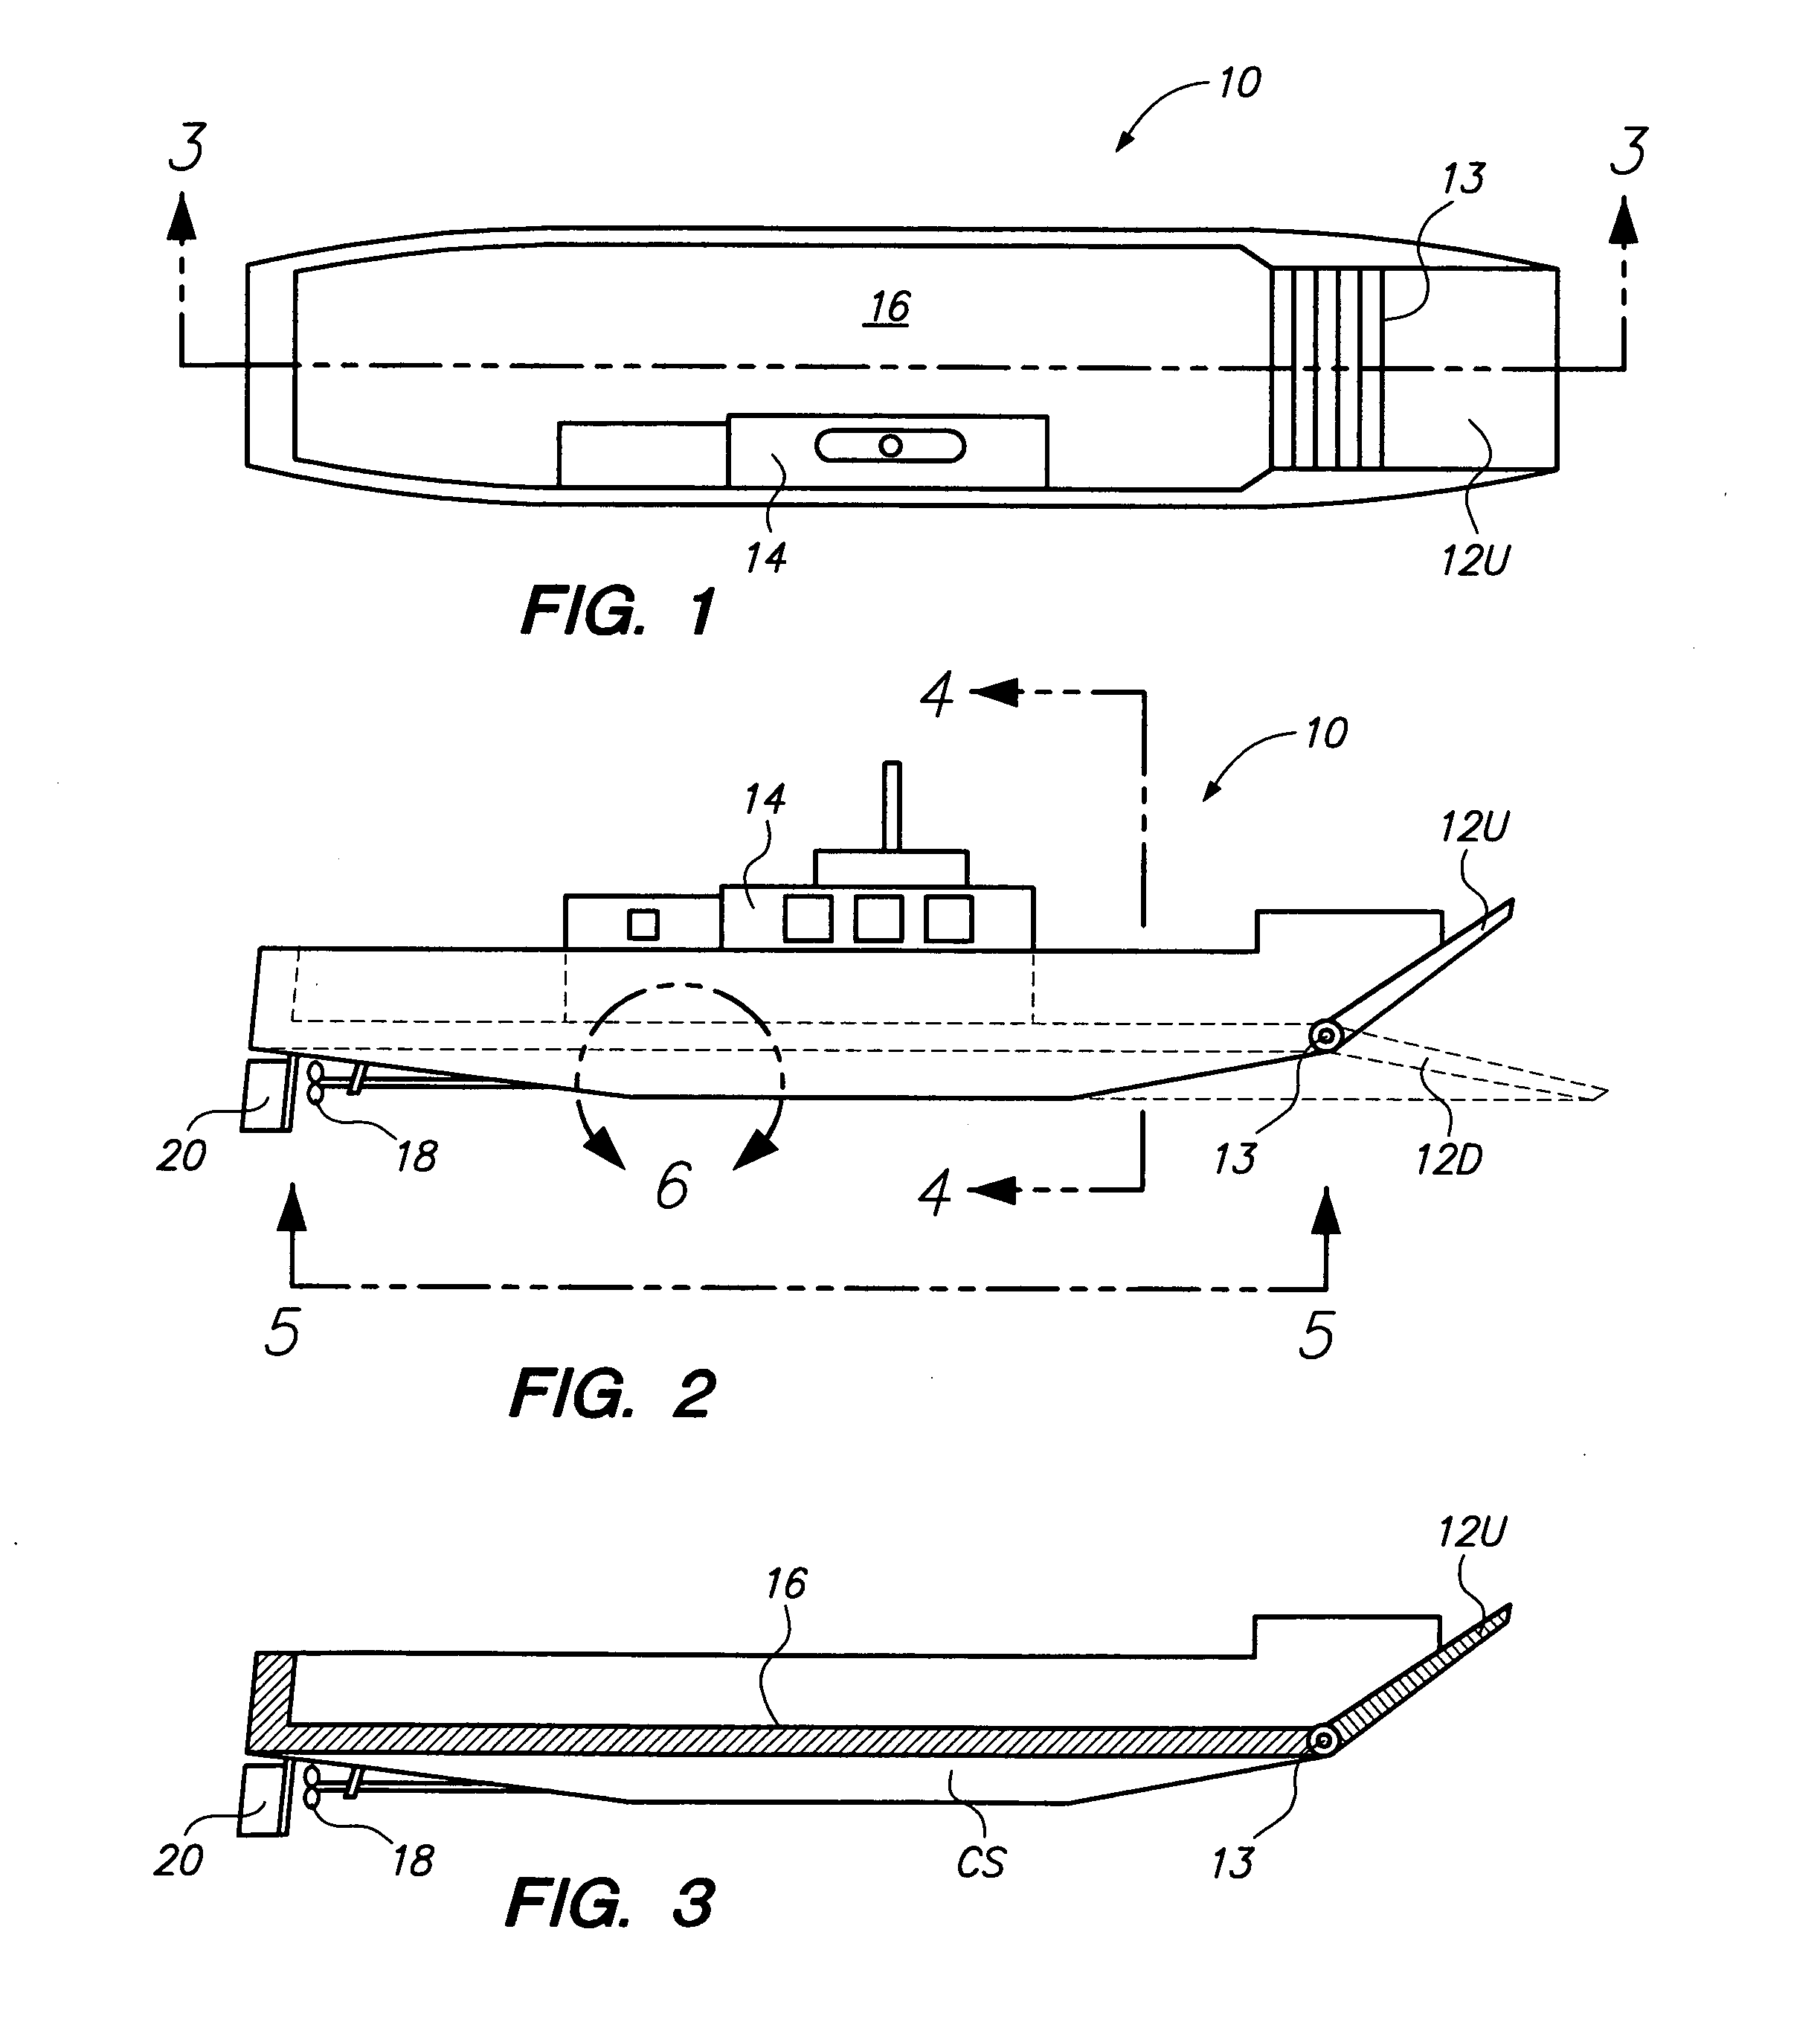 Flat-bottomed landing craft